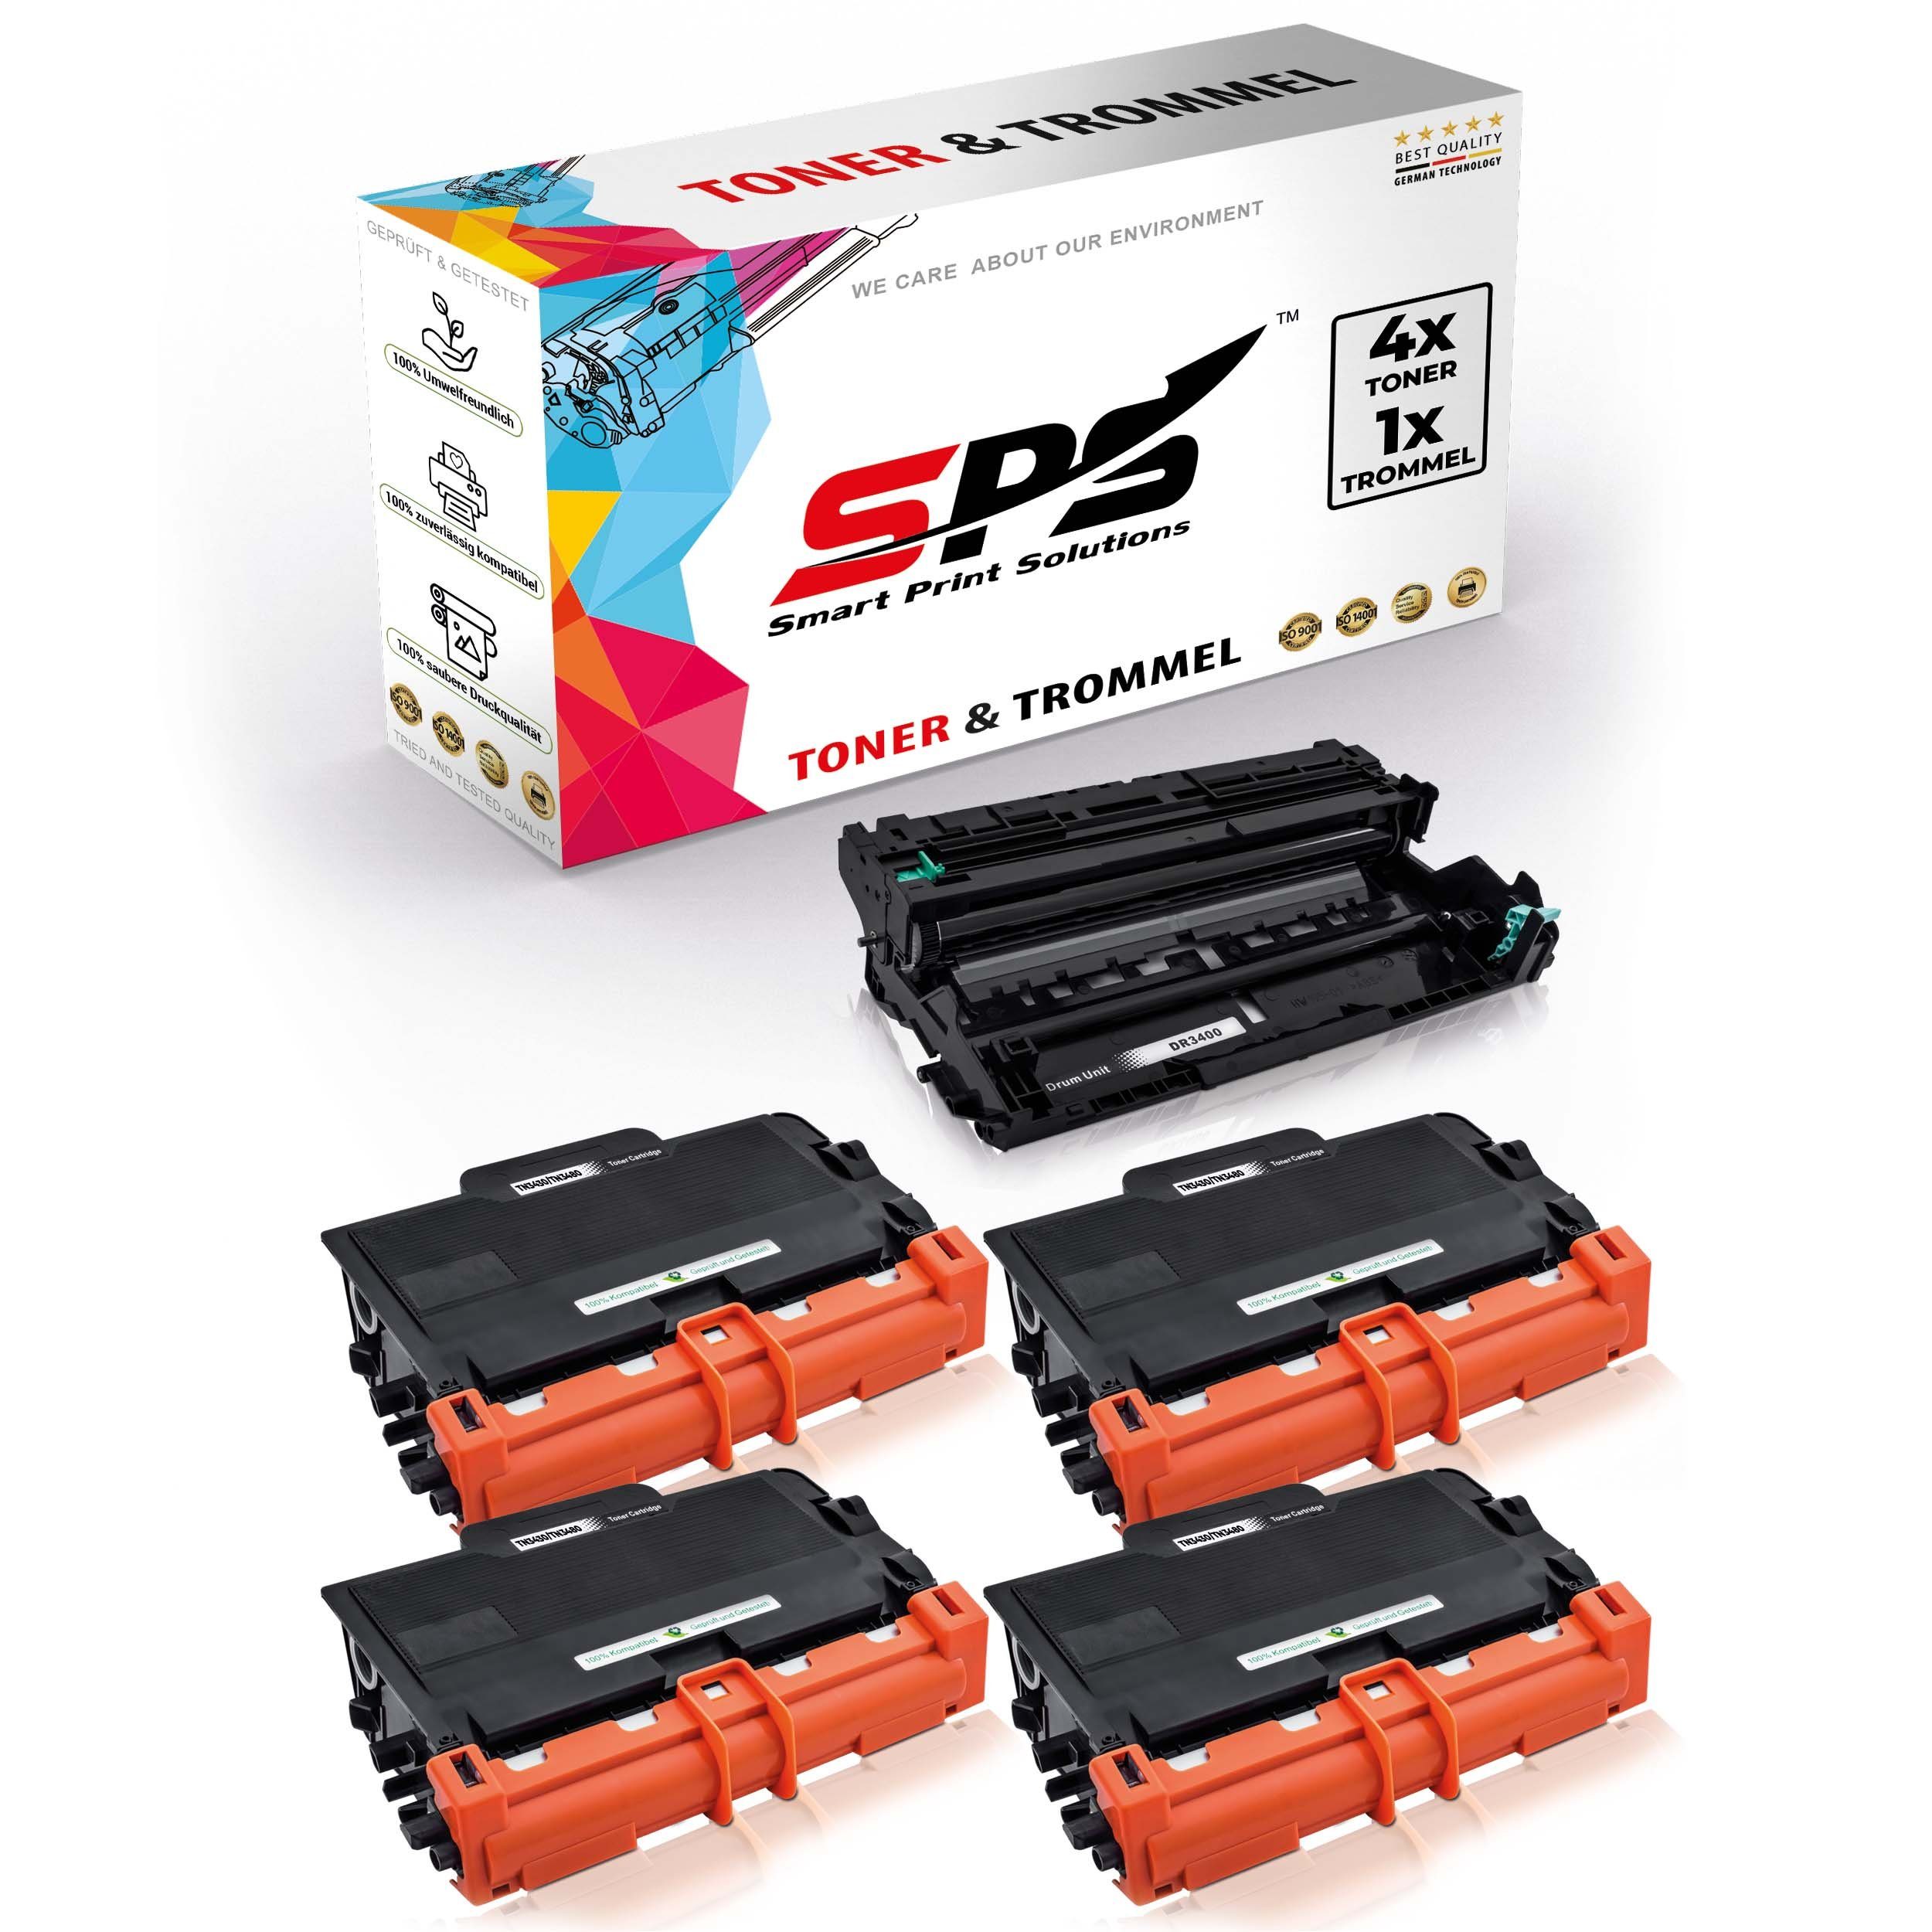 SPS Tonerkartusche Kompatibel für Brother DCP-L5650 DR-3400 TN-3430, (5er Pack) | Tonerpatronen